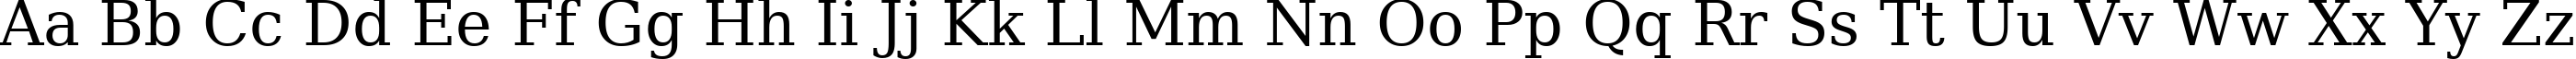 Пример написания английского алфавита шрифтом ae_Kayrawan